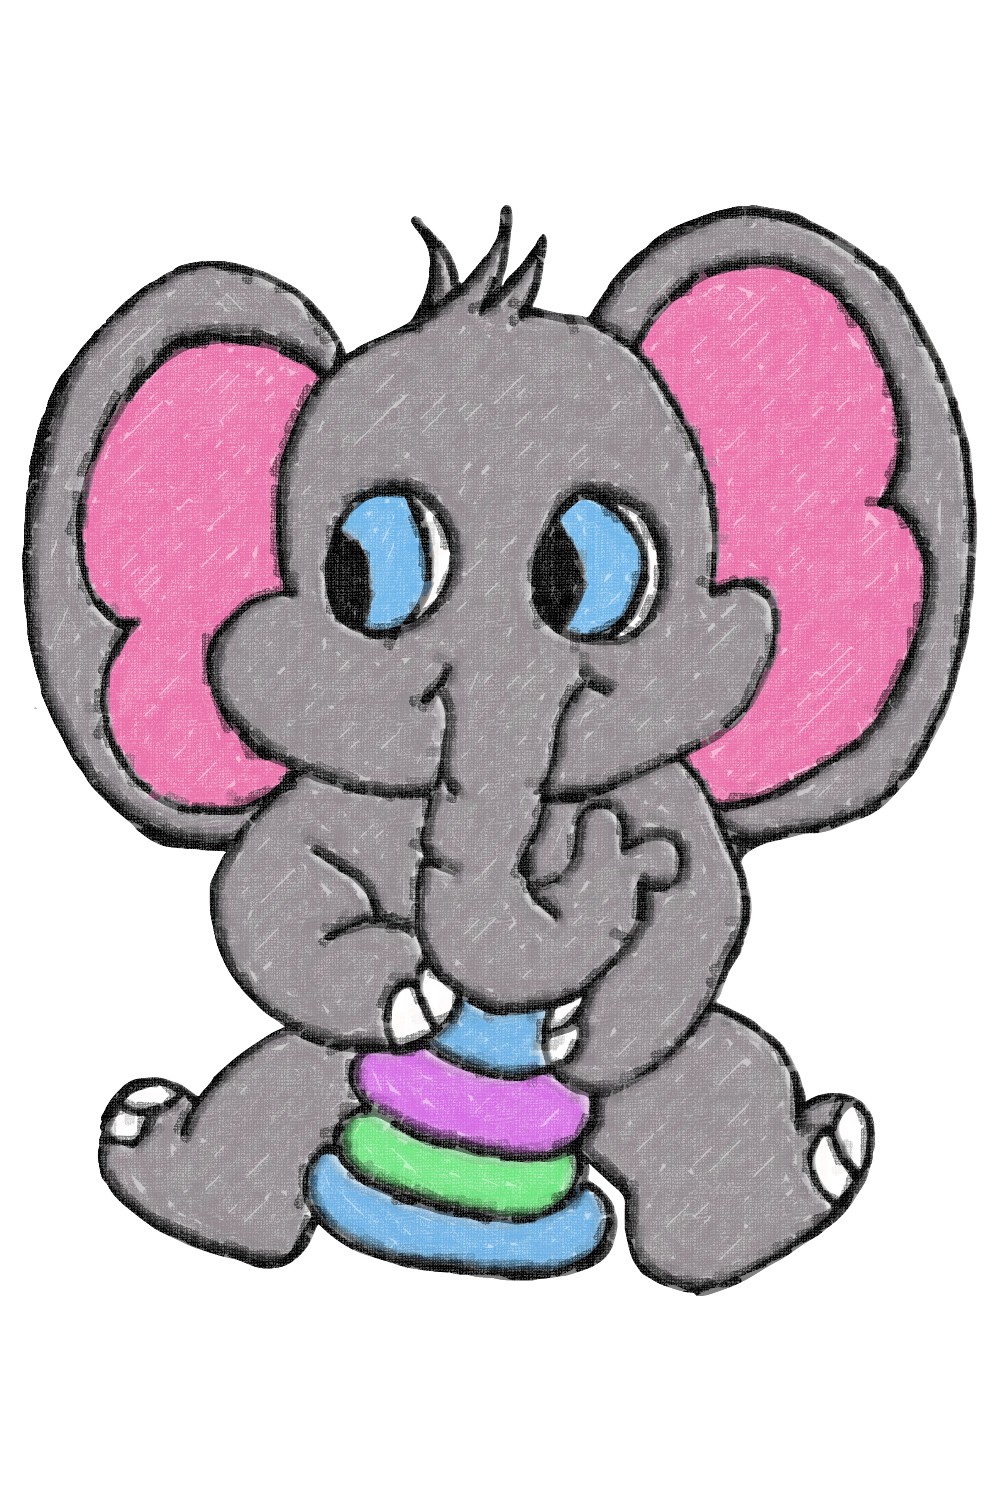 Cute Pencil Art Elephant Embellishment Pinterest Image.